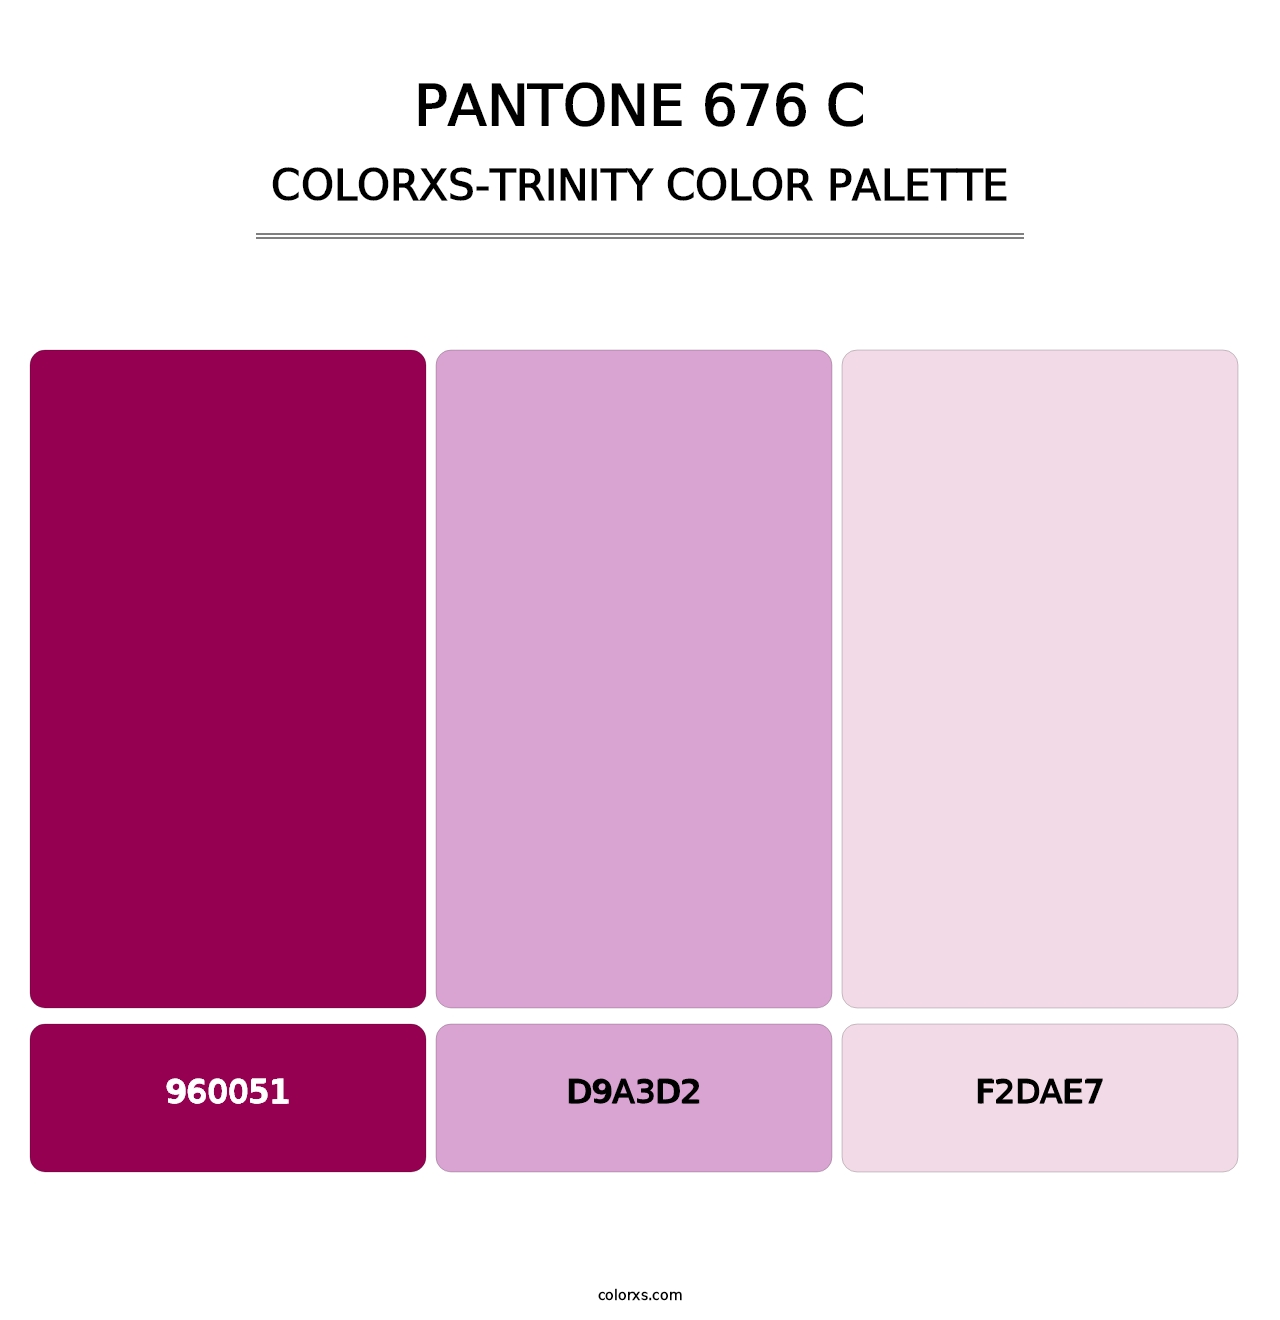 PANTONE 676 C - Colorxs Trinity Palette